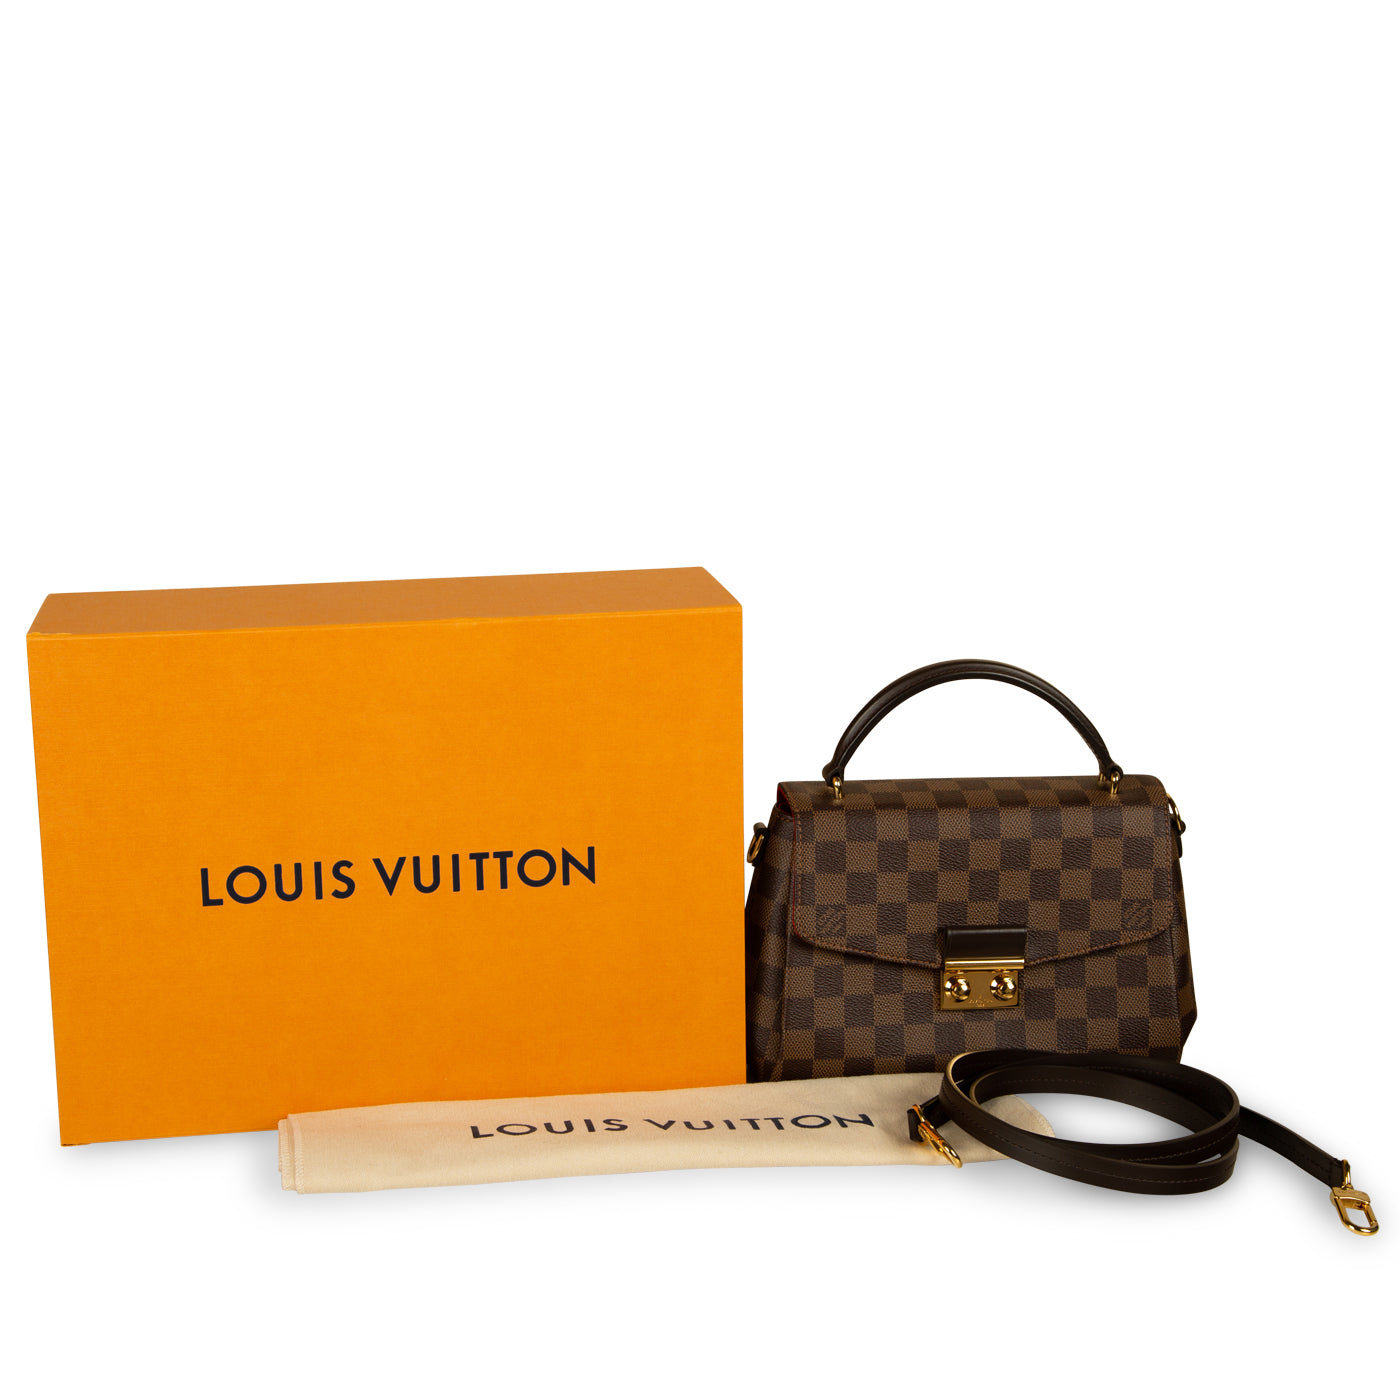 Louis Vuitton - Croisette - Damier Ebene - Pre-Loved - Immaculate